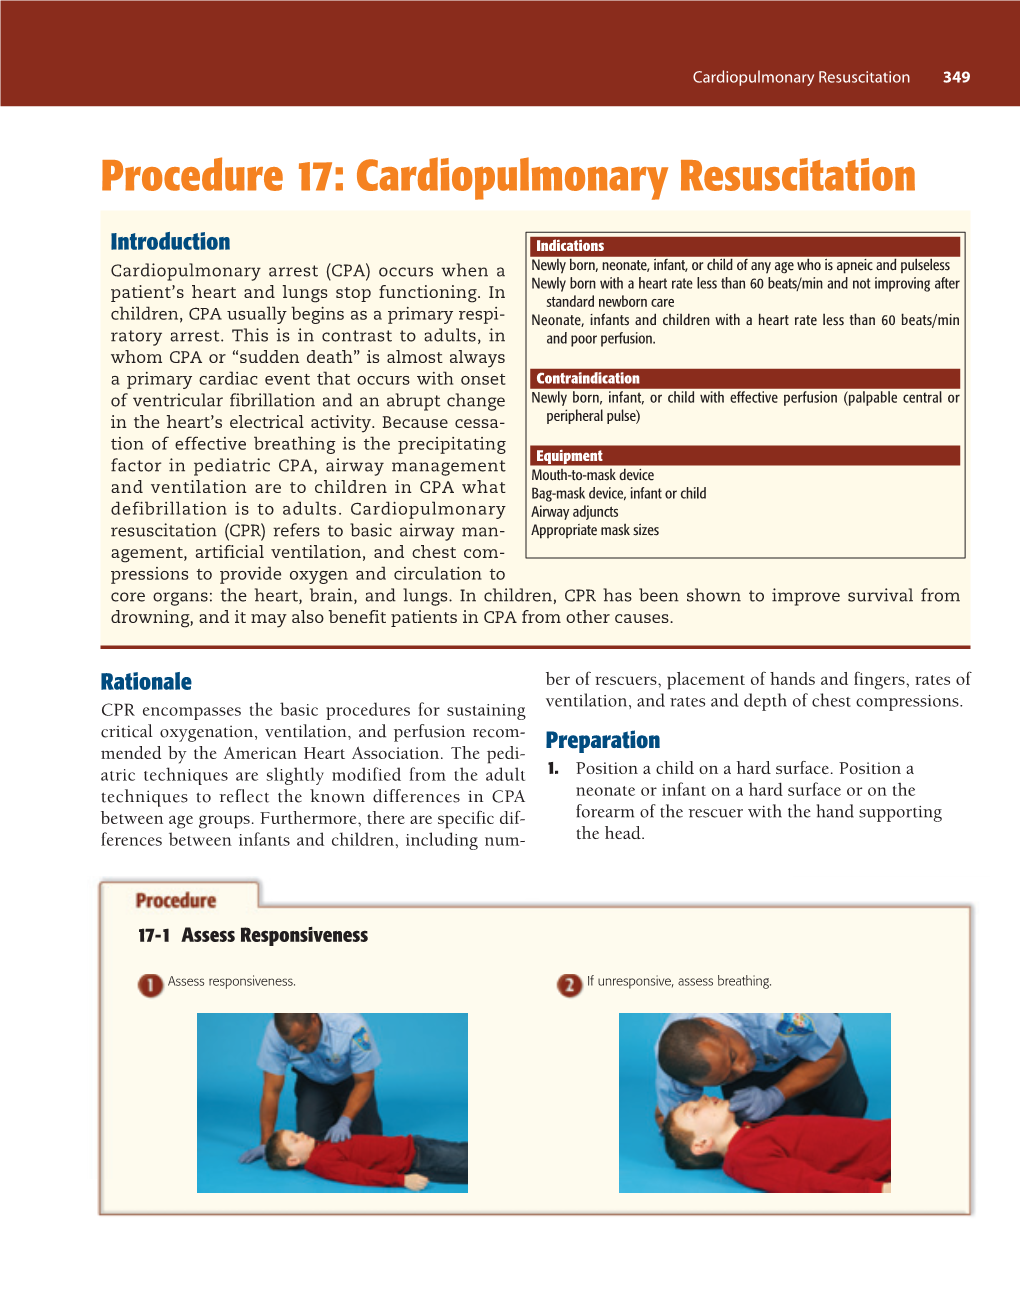 Procedure 17: Cardiopulmonary Resuscitation